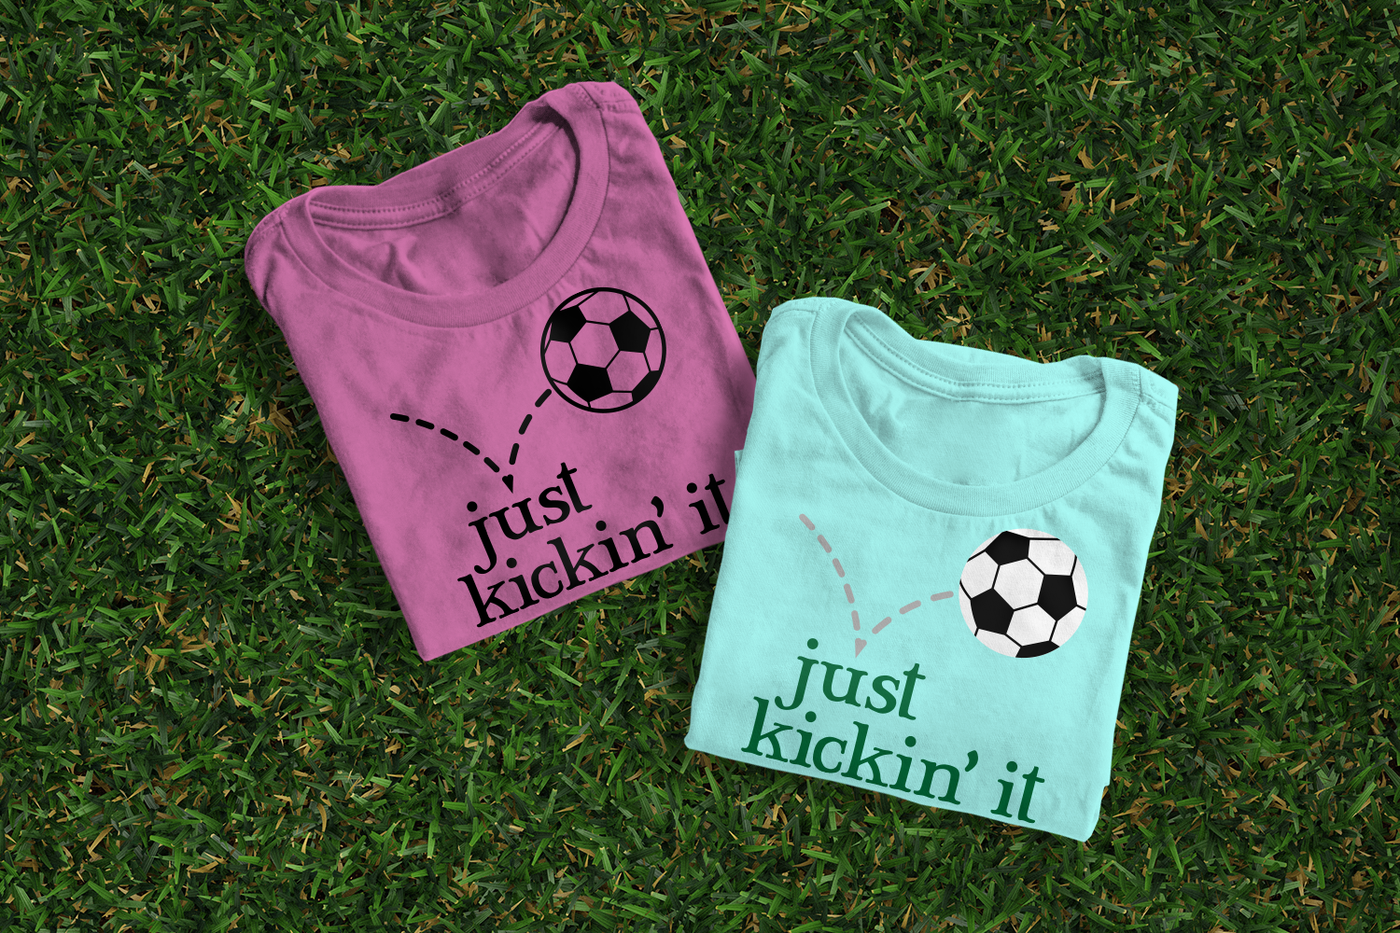 "Just kickin' it" soccer ball design